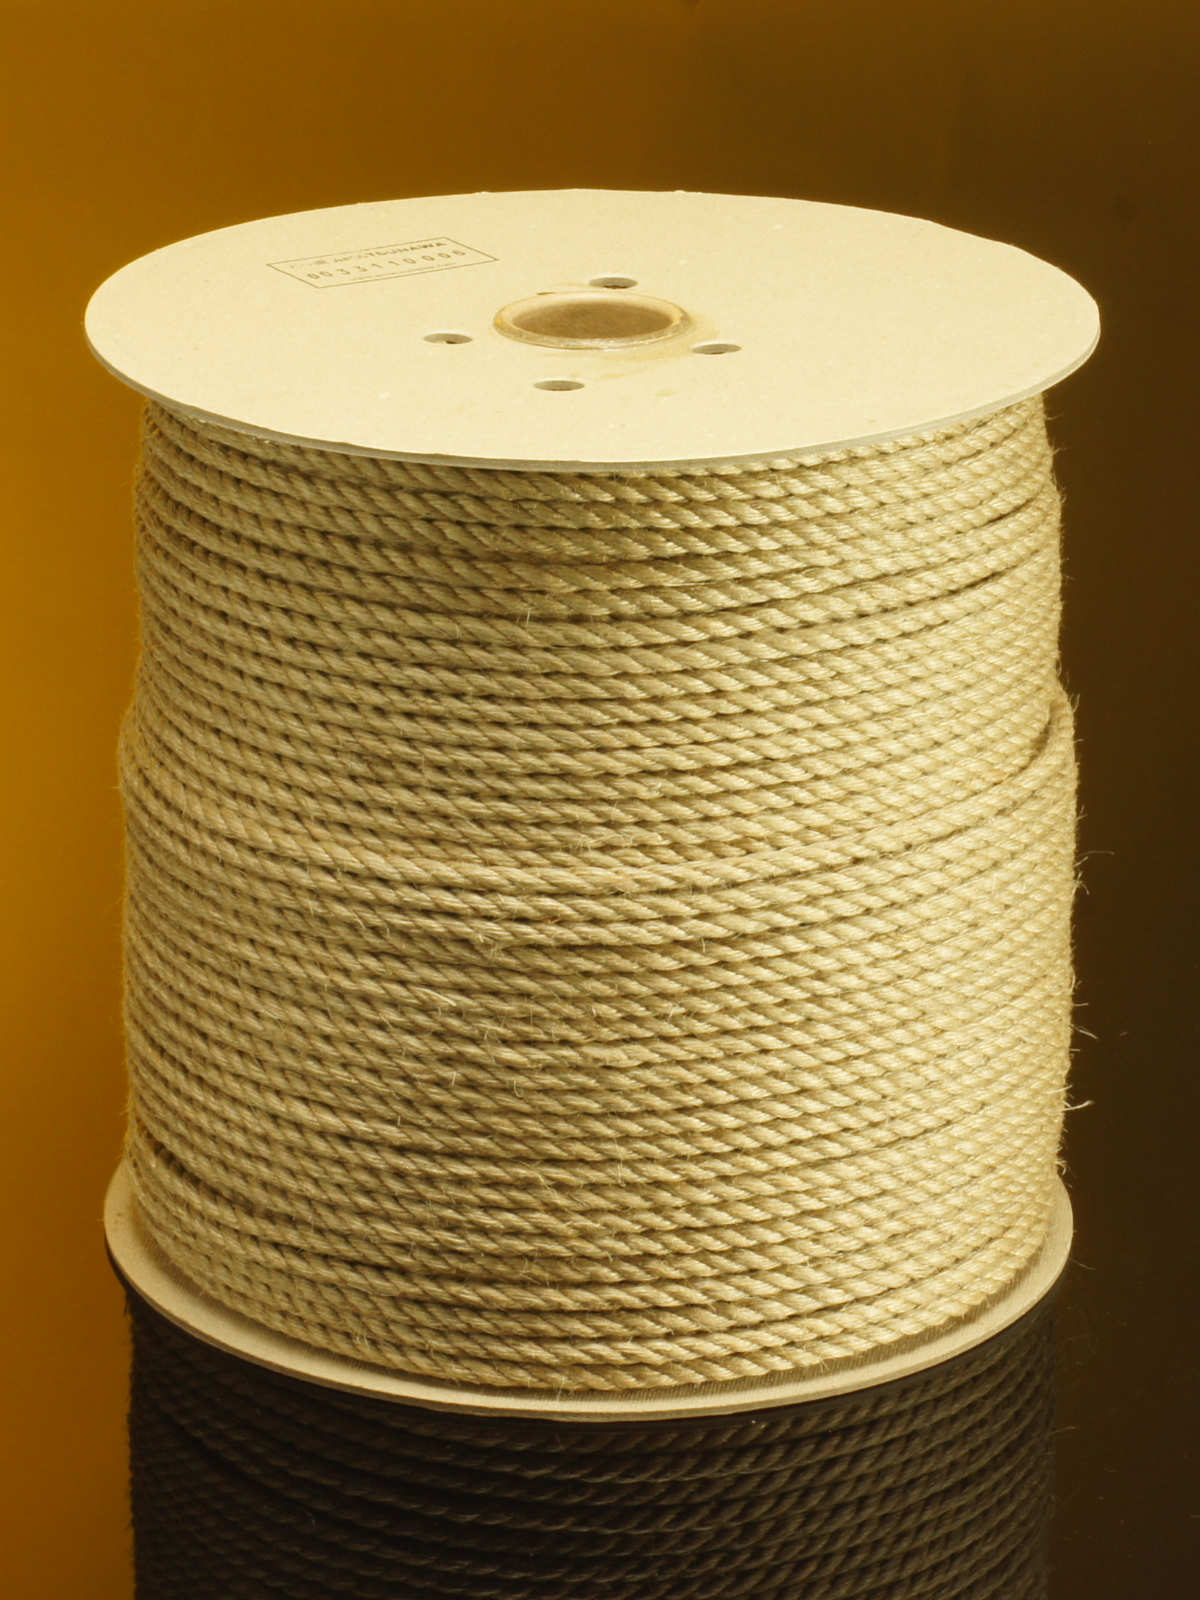 RAW AMATSUNAWA 5/5 MAXI-ROLL, ~5.5kg, Japanese-made jute rope, various diameters, JBO-free, unprocessed